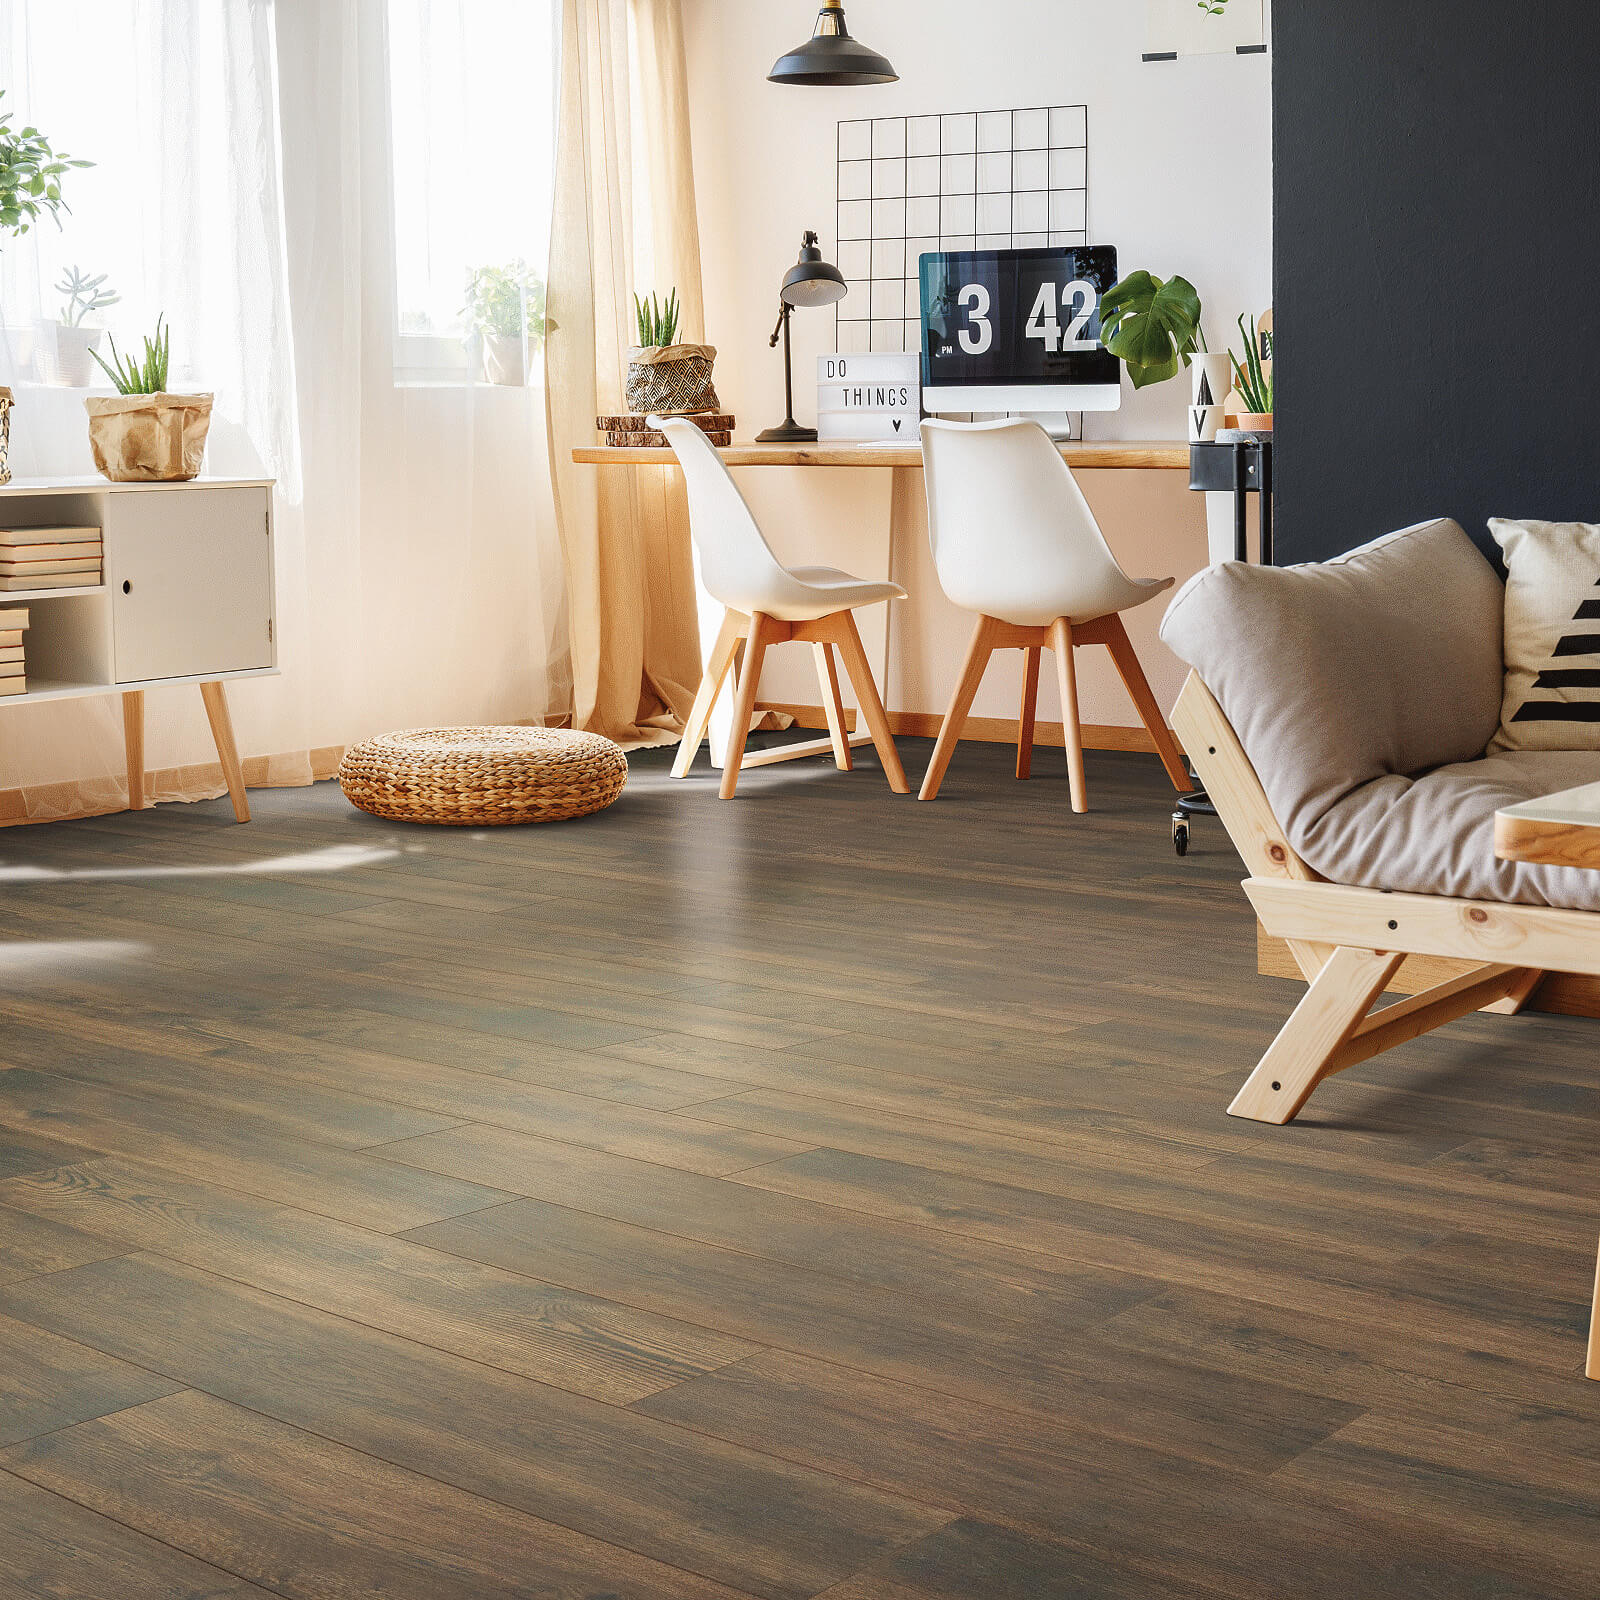 Laminate flooring | Carpet And Floors For Less